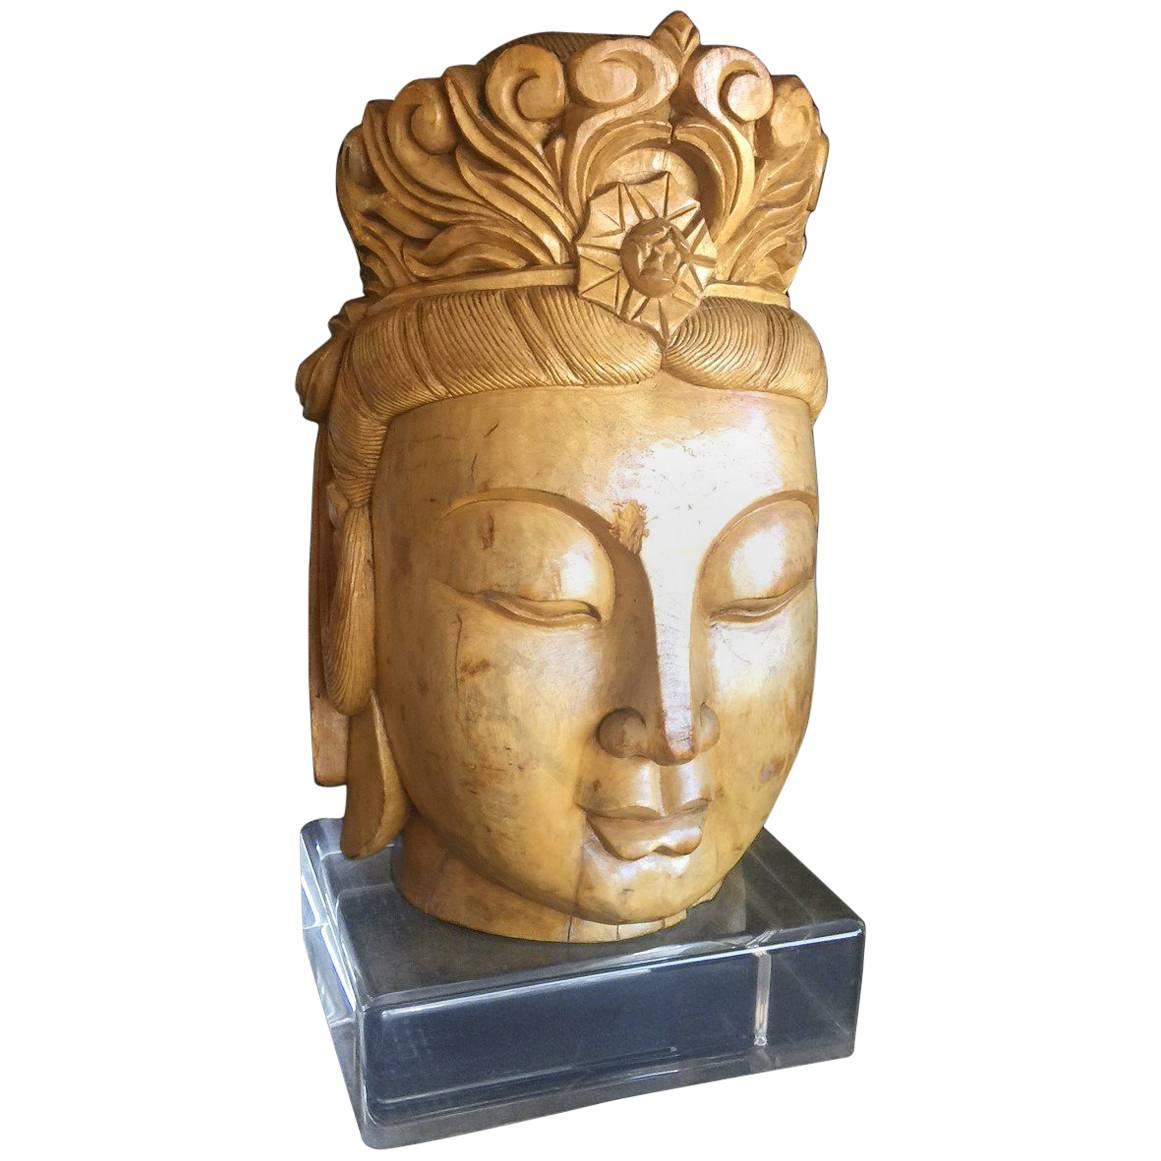 Impressive Hand-Carved Wooden Buddha Head on Acrylic Base